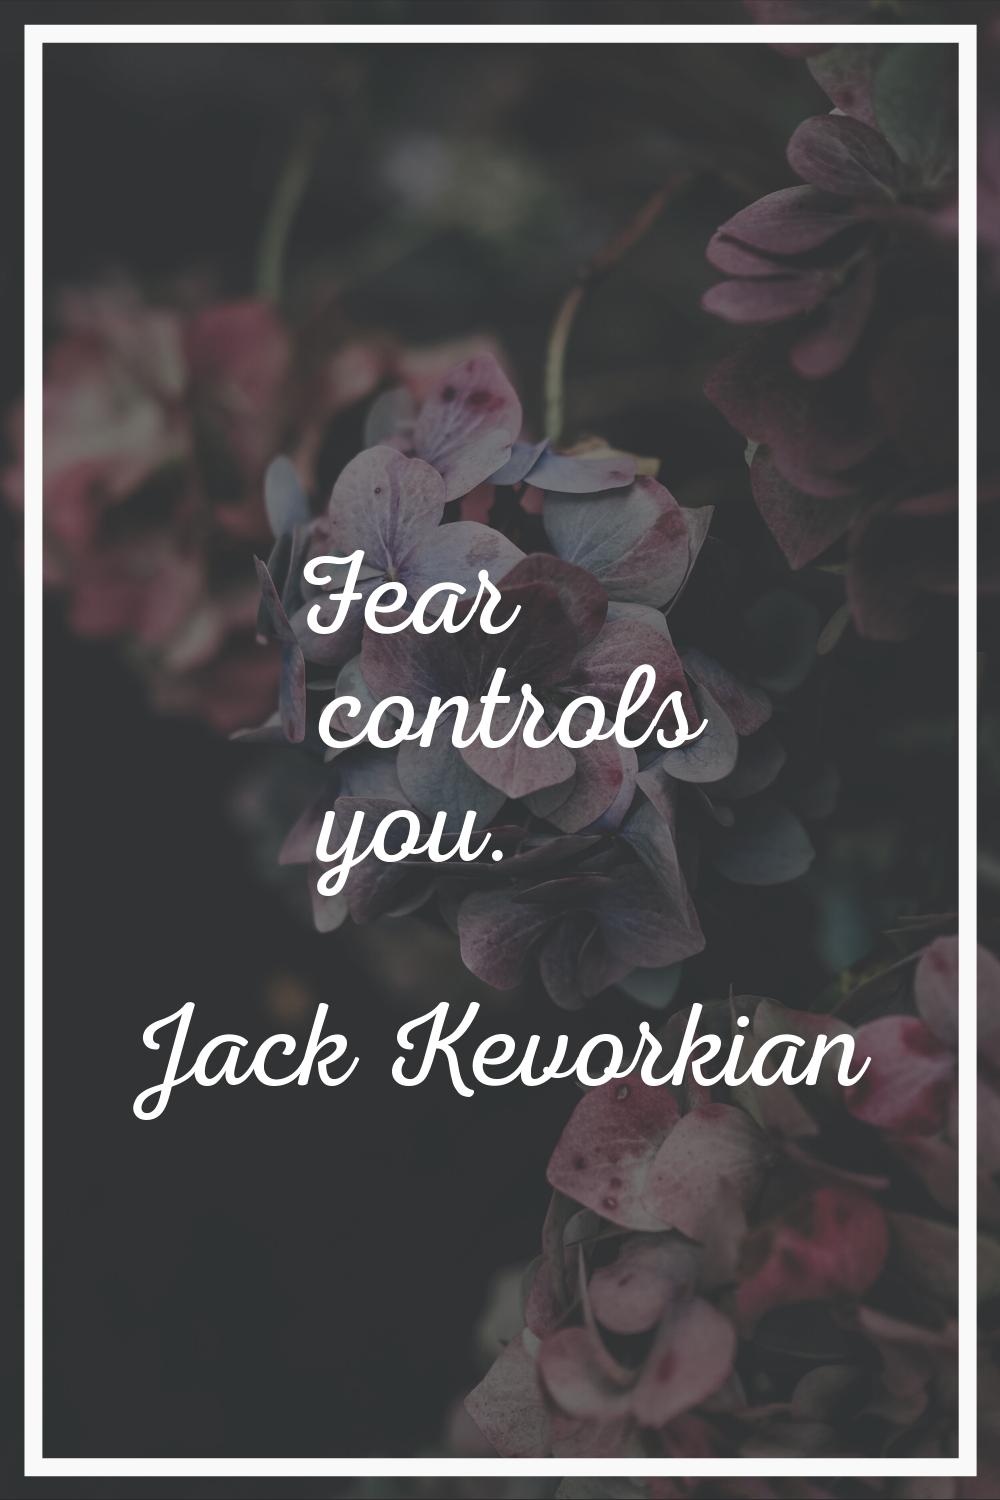 Fear controls you.